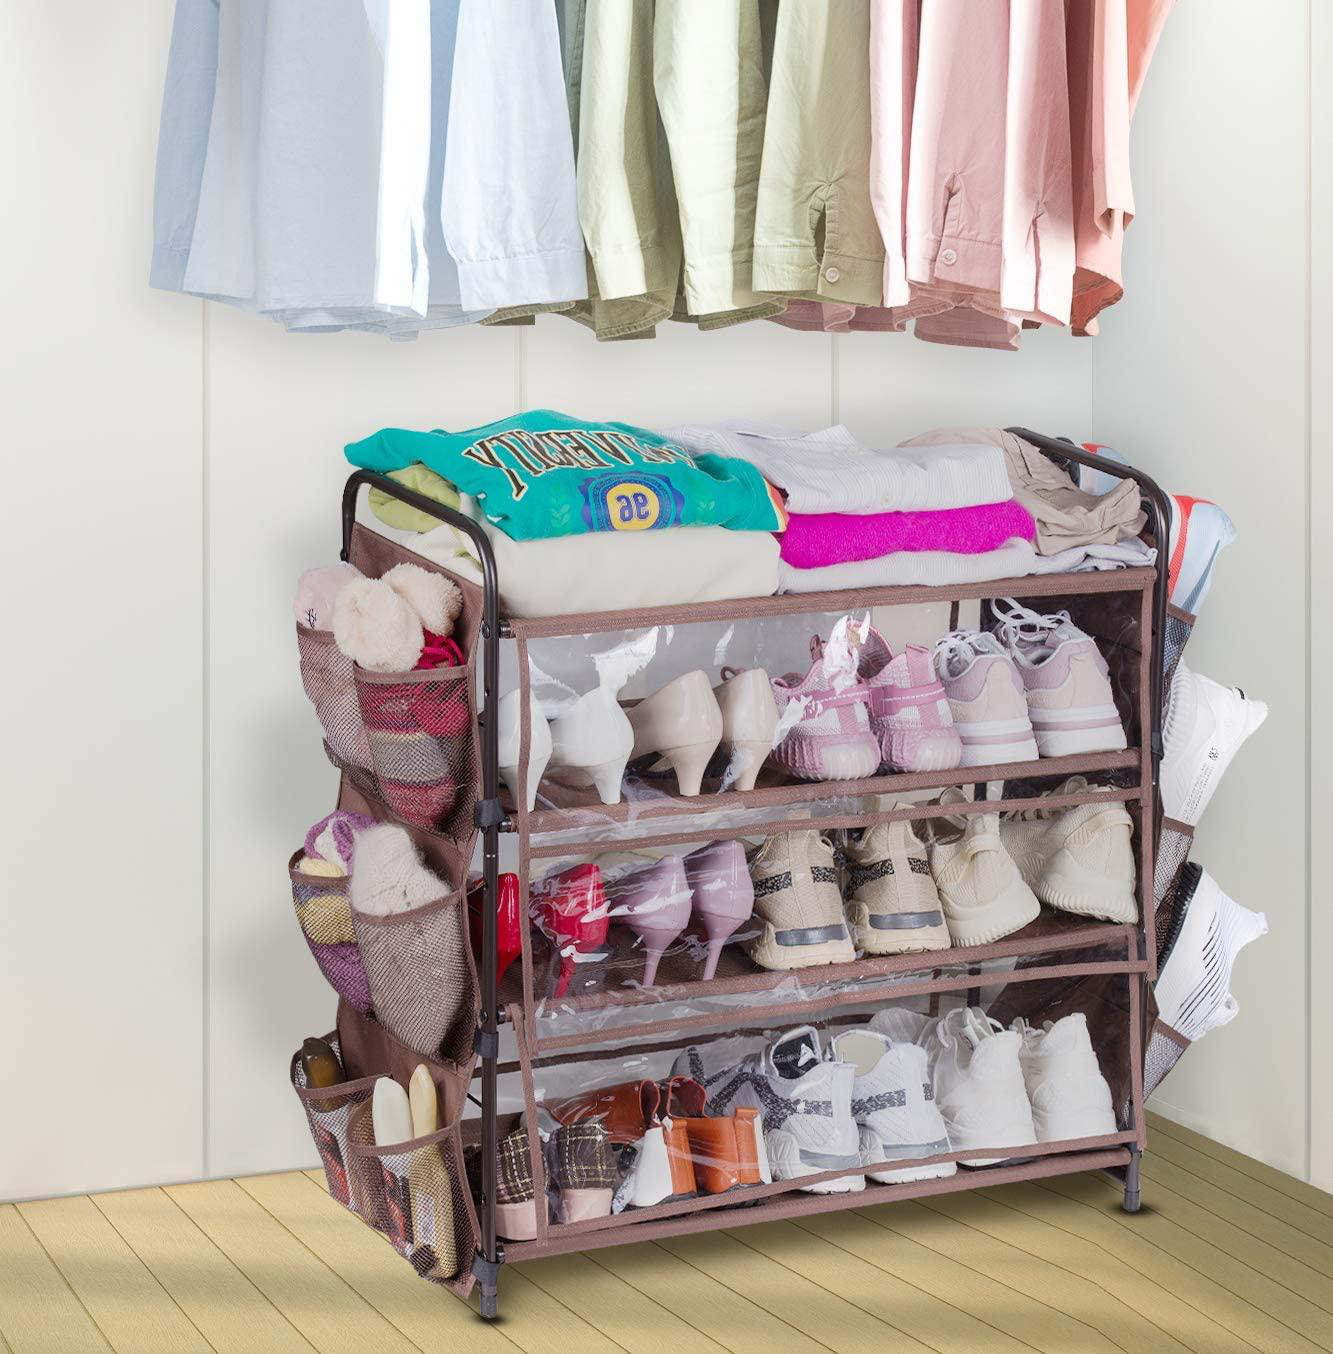 Details about   Portable 4 Tier Shoe Rack Closet Home Storage Entryway Organizer Cabinet Shelf